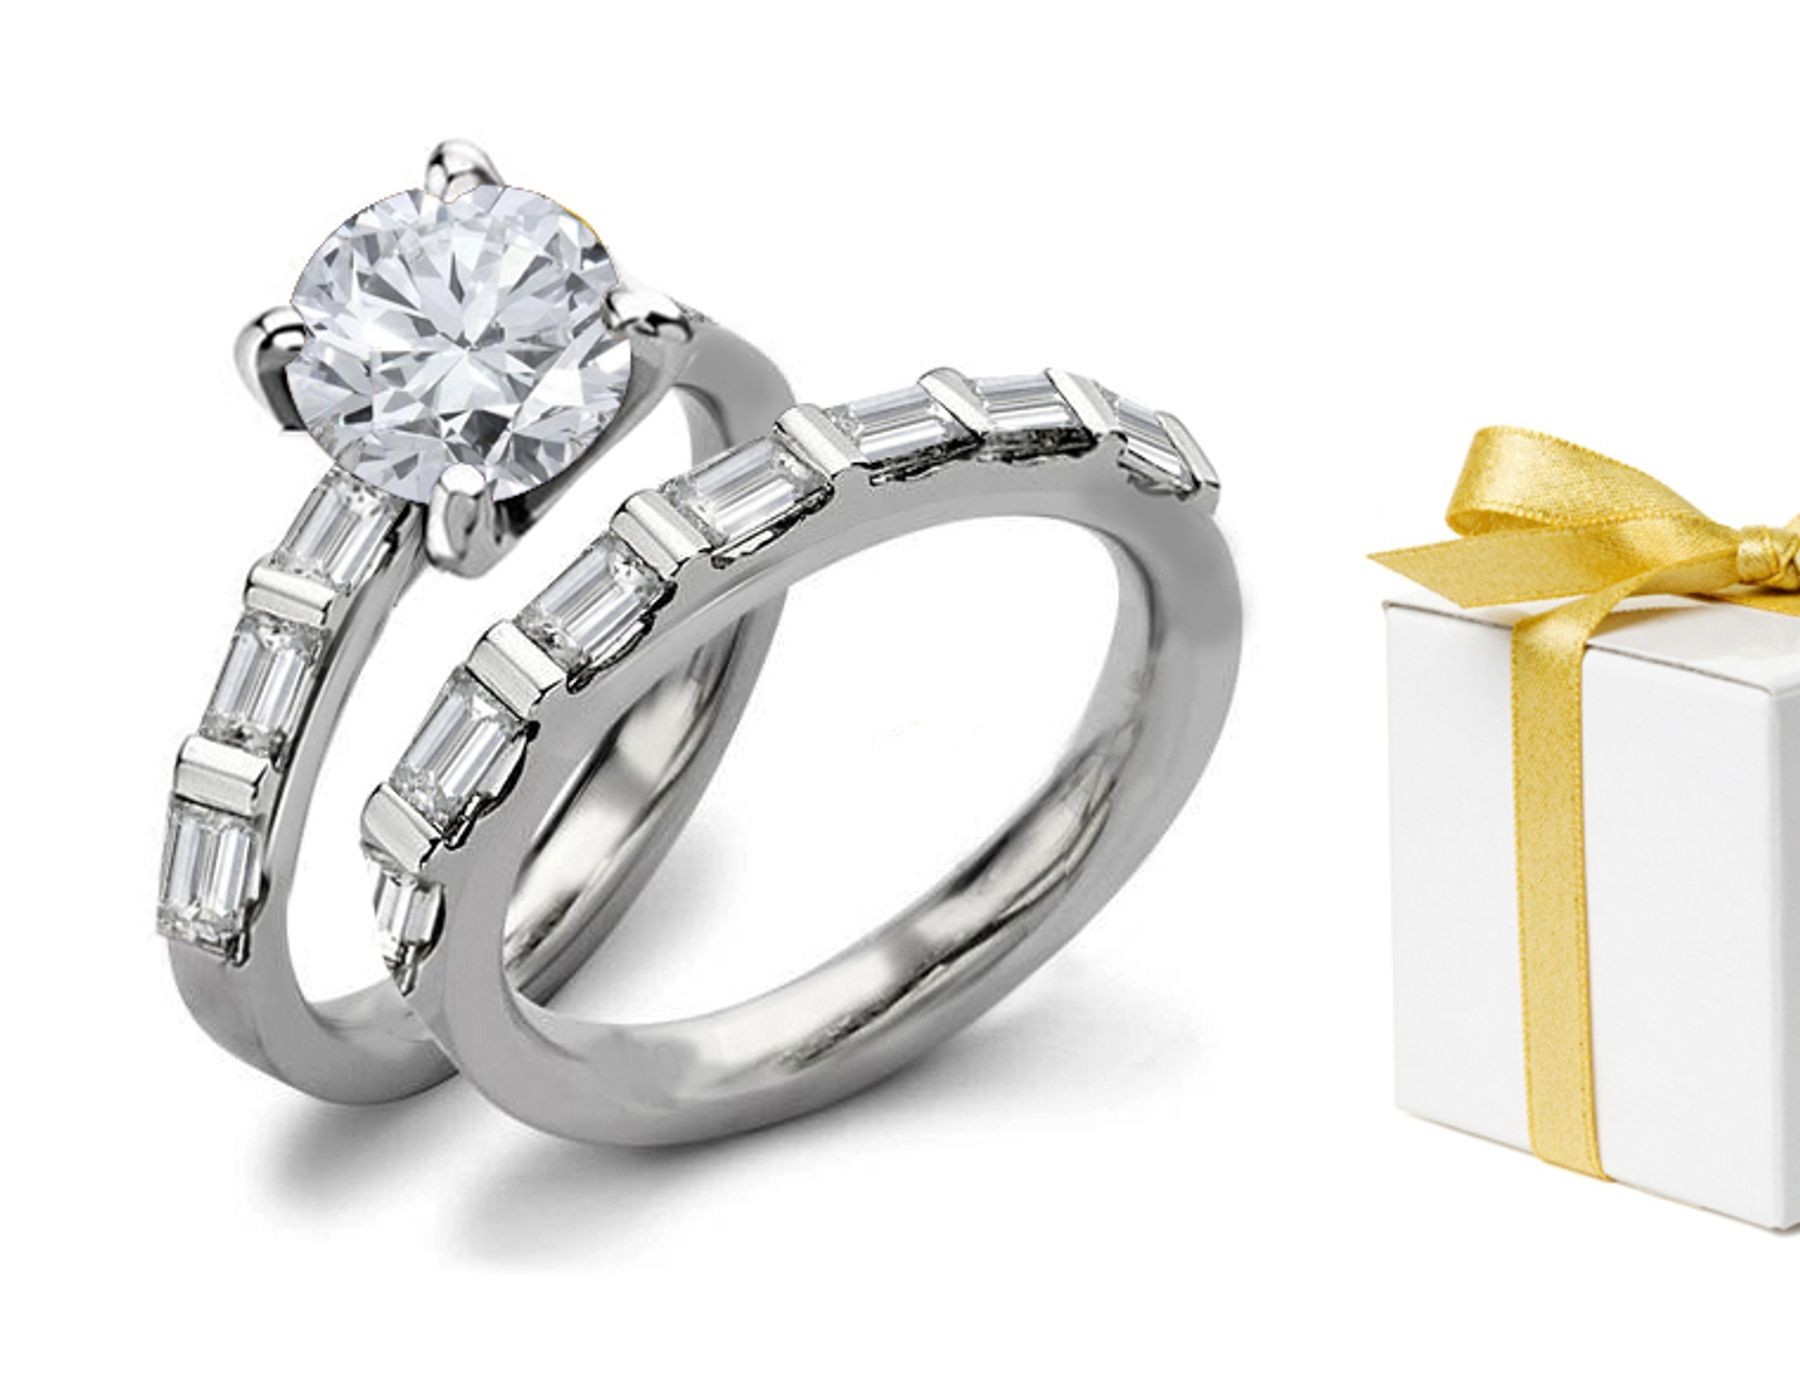 Premier Designer Diamond Engagement & Wedding Rings Set